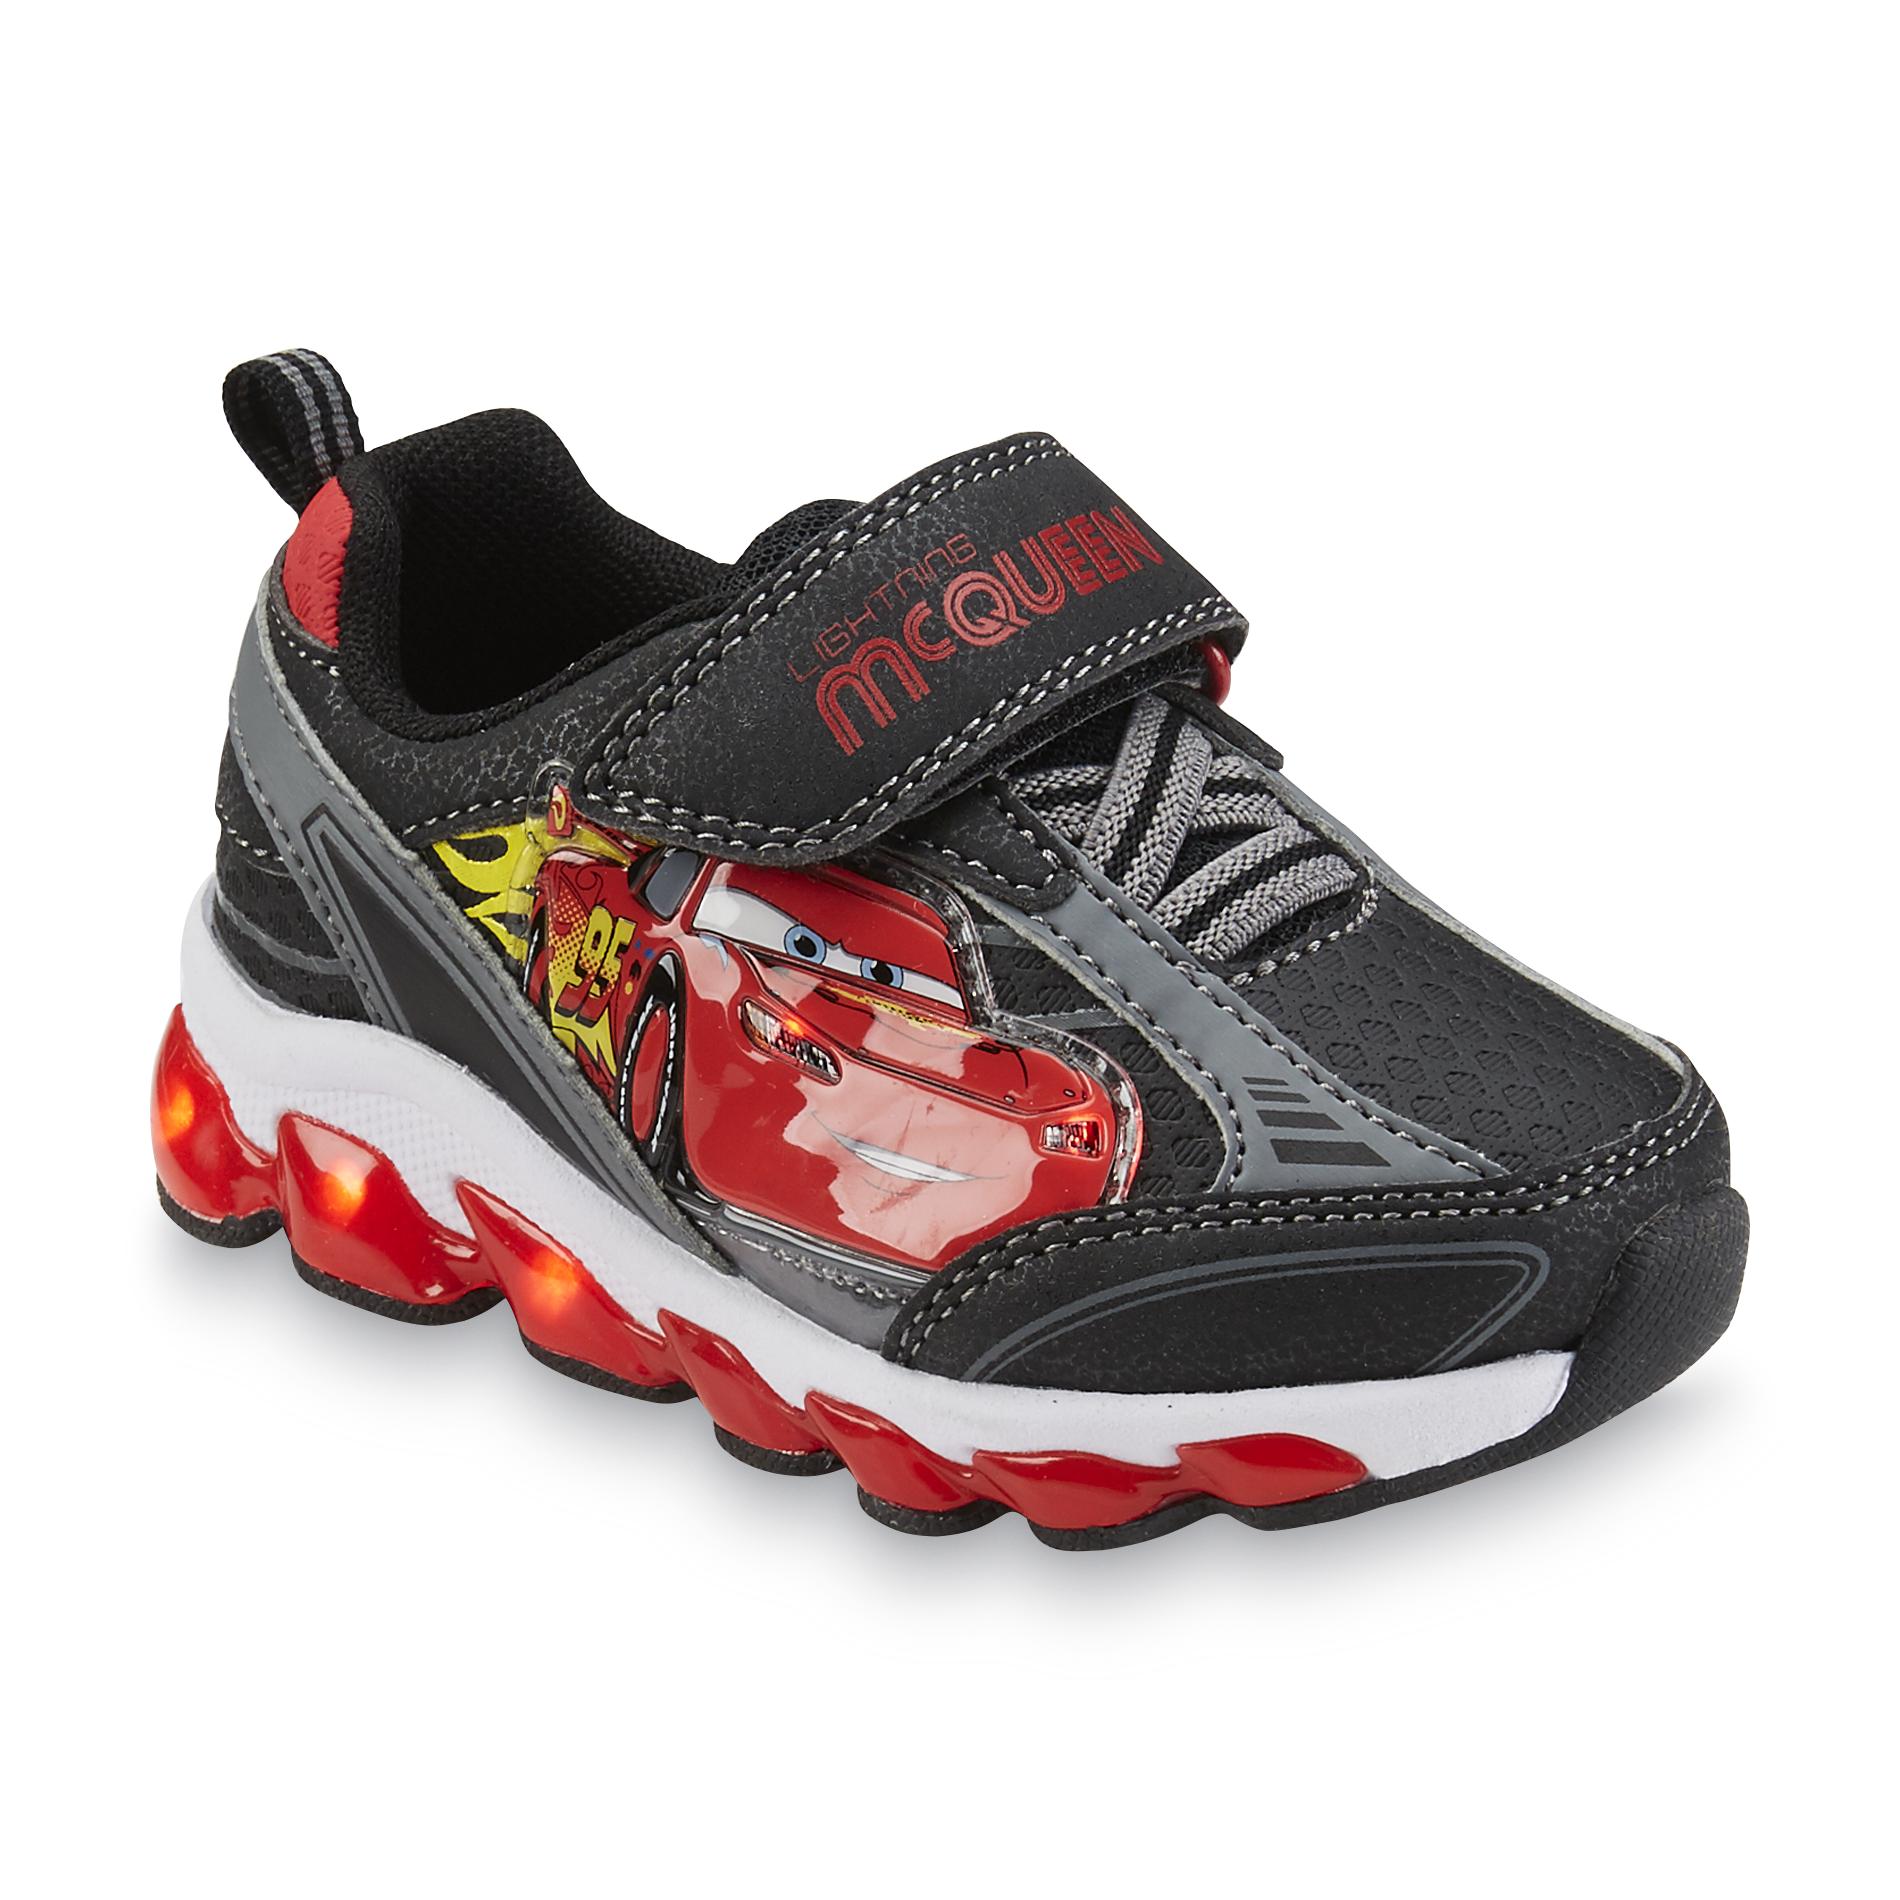 Disney Toddler Boy's Cars Black/Red/Gray Light-Up Shoes